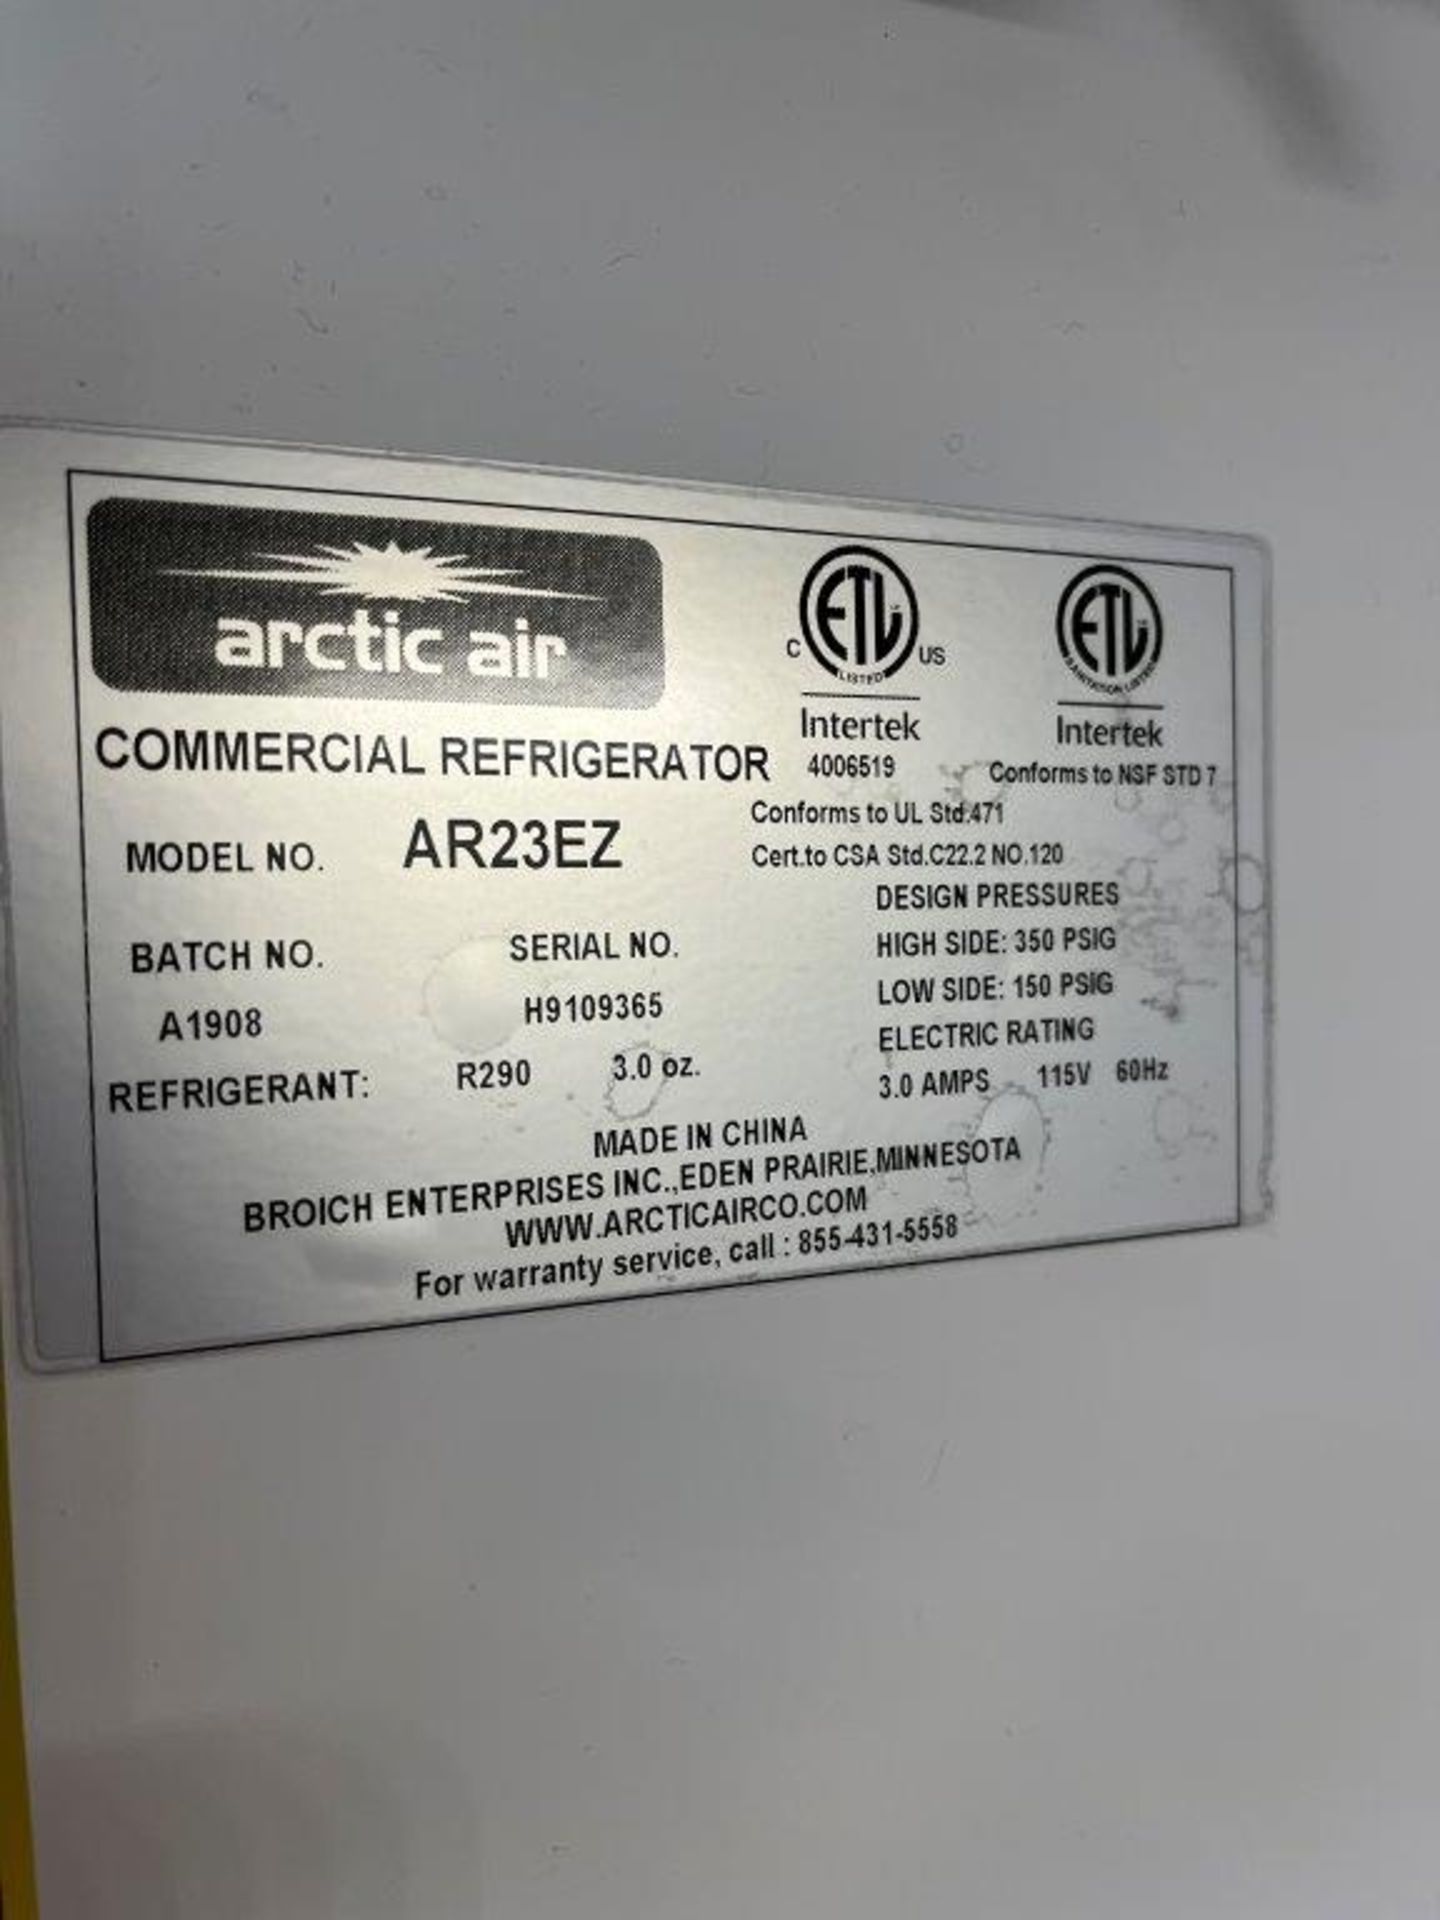 Arctic Air AR23EZ Commercial Refrigerator - Image 2 of 2